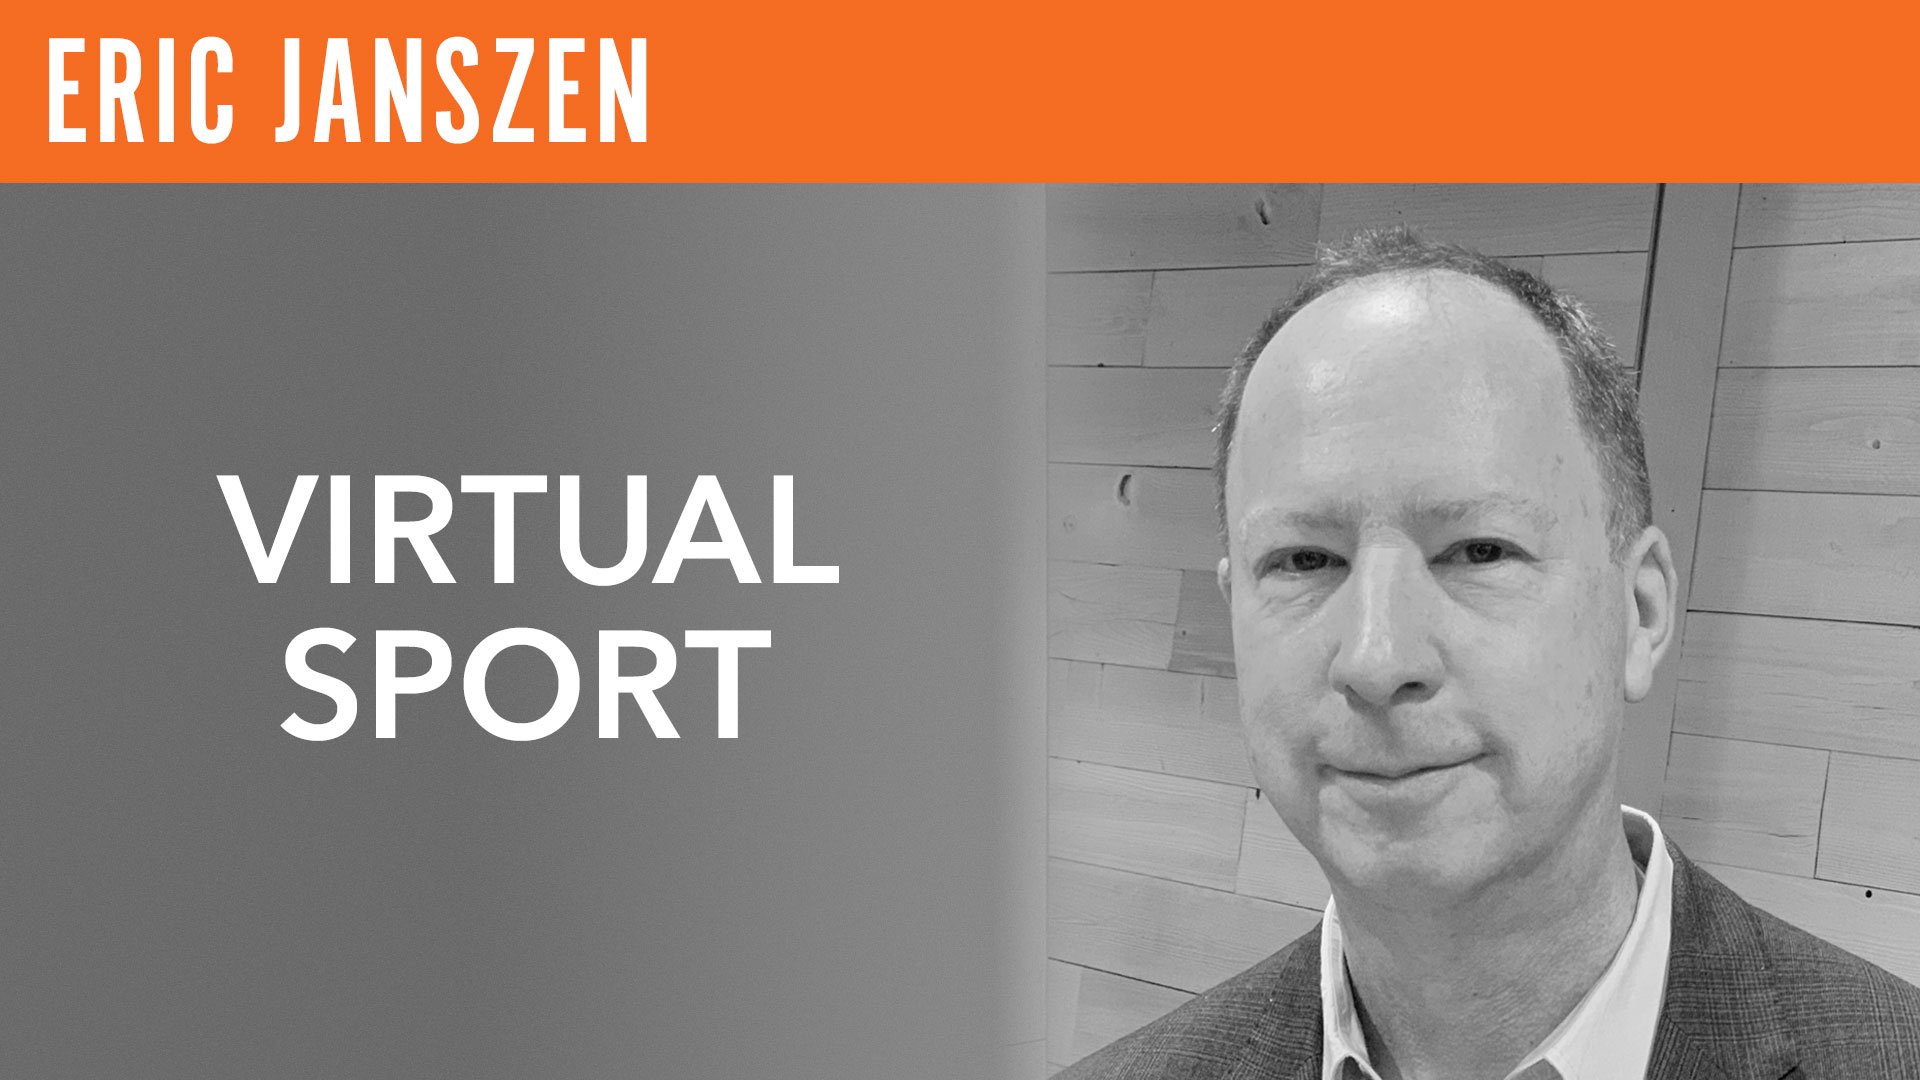 Eric Janszen, "Virtual Sport"